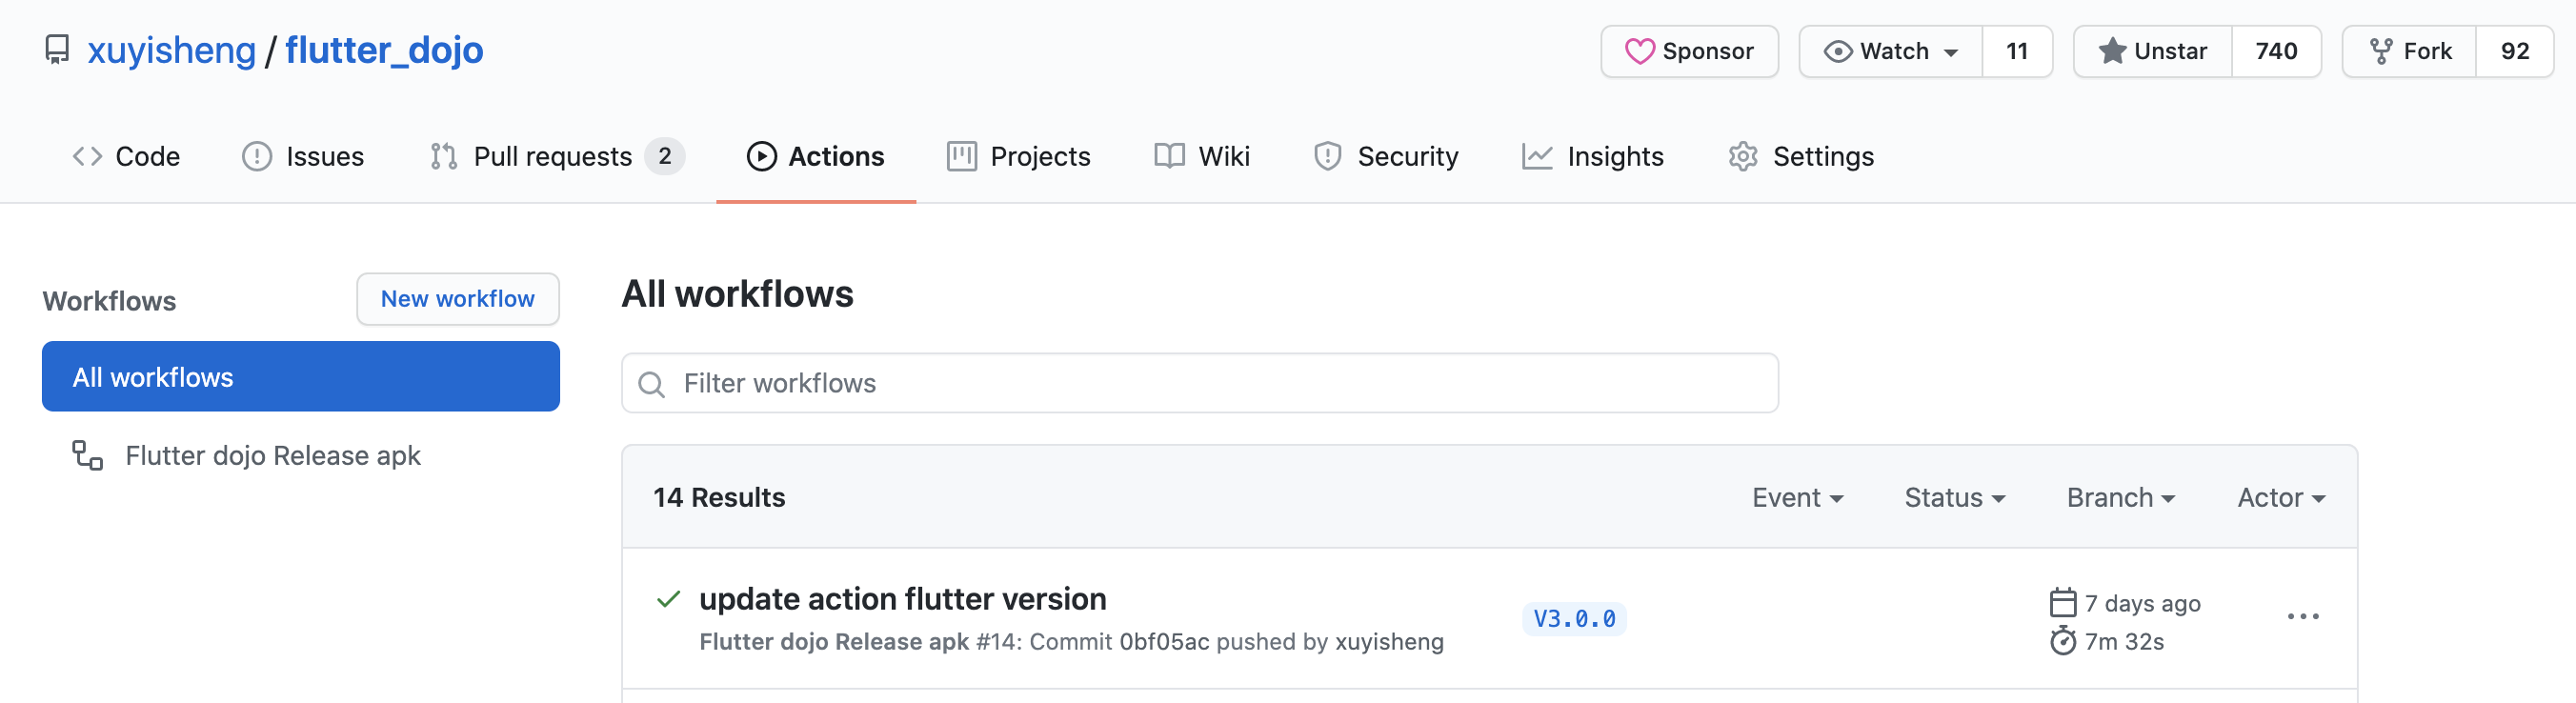 Flutter Dojo设计之道——利用Github打造完善的开源项目-鸿蒙开发者社区